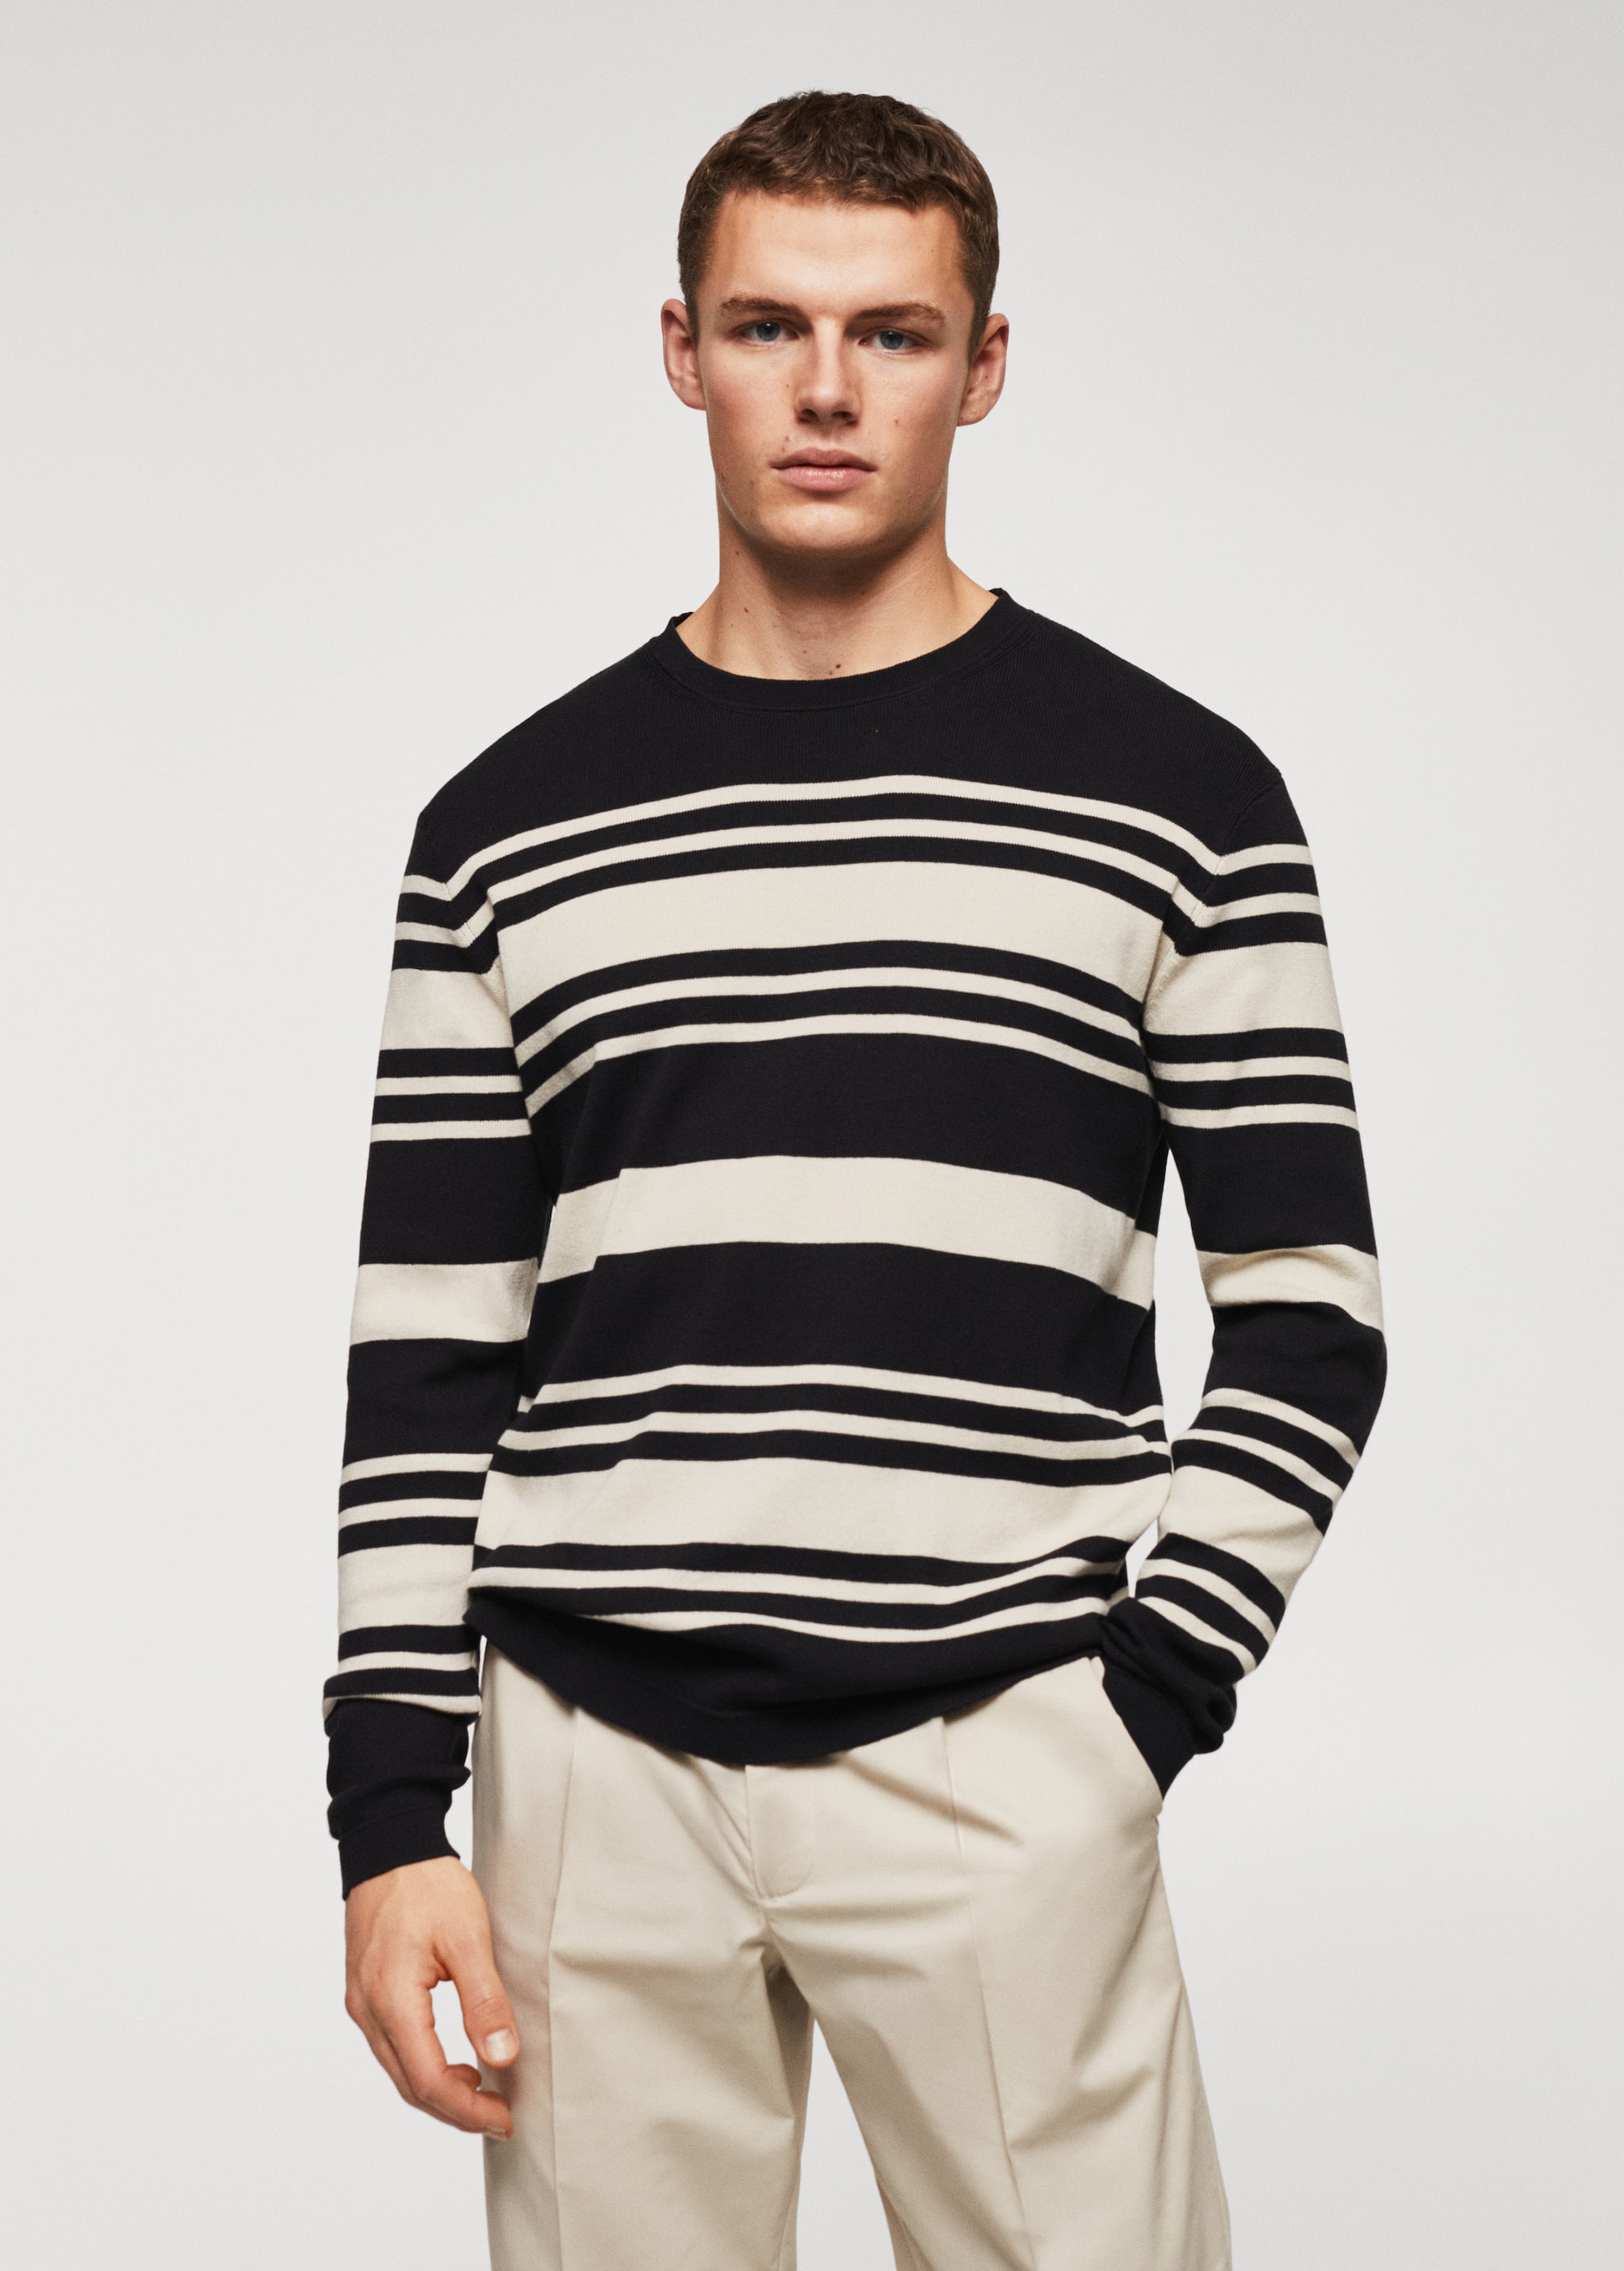 Striped cotton sweater - Medium plane